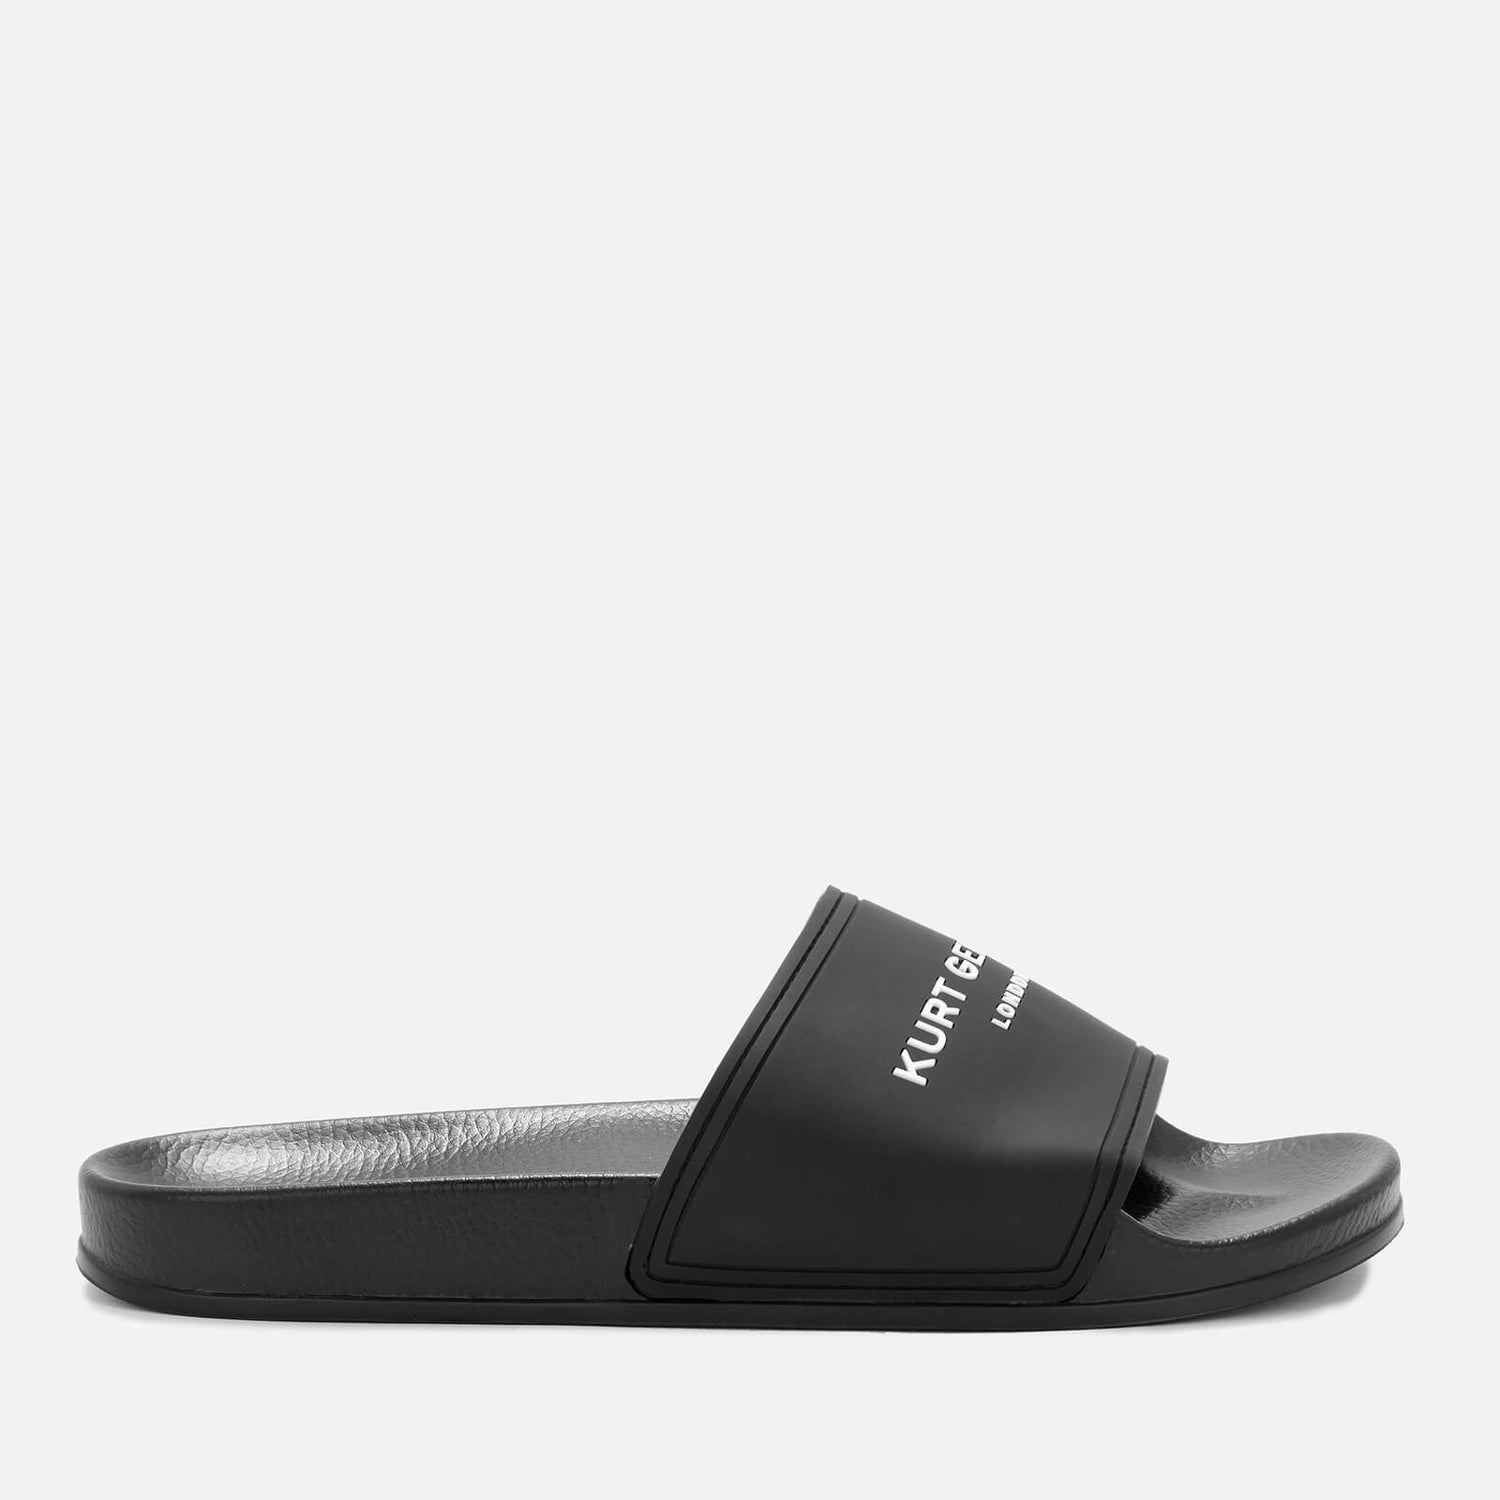 Kurt Geiger London Men's Slide Sandals - Black